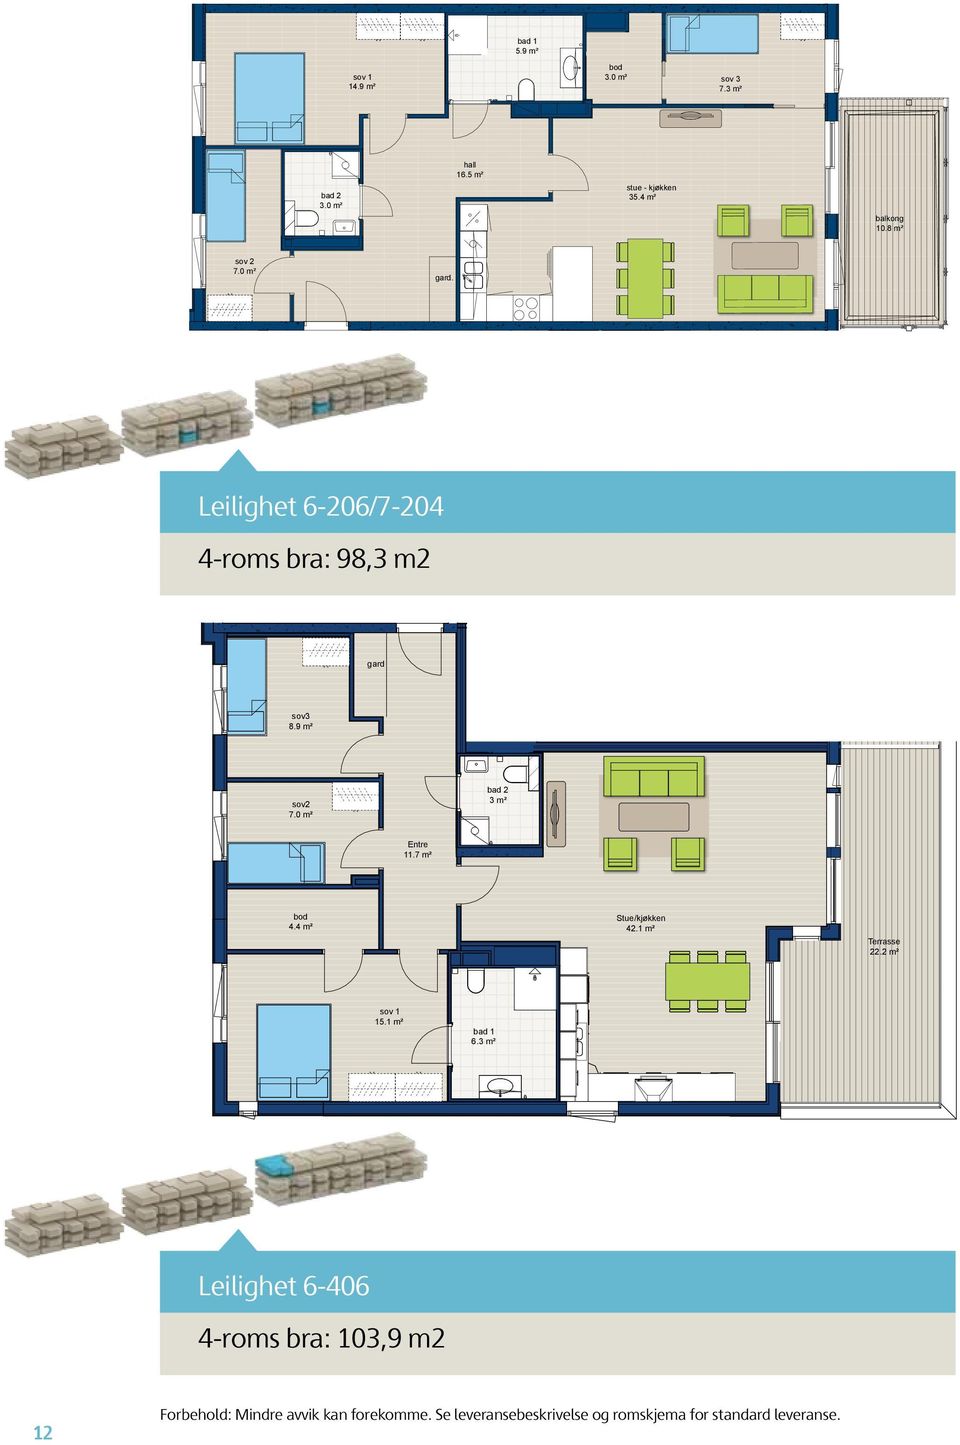 9 m² sov2 7.0 m² bad 2 3 m² Entre 11.7 m² 4.4 m² Stue/kjøkken 42.1 m² Terrasse 22.2 m² 15.1 m² bad 1 6.